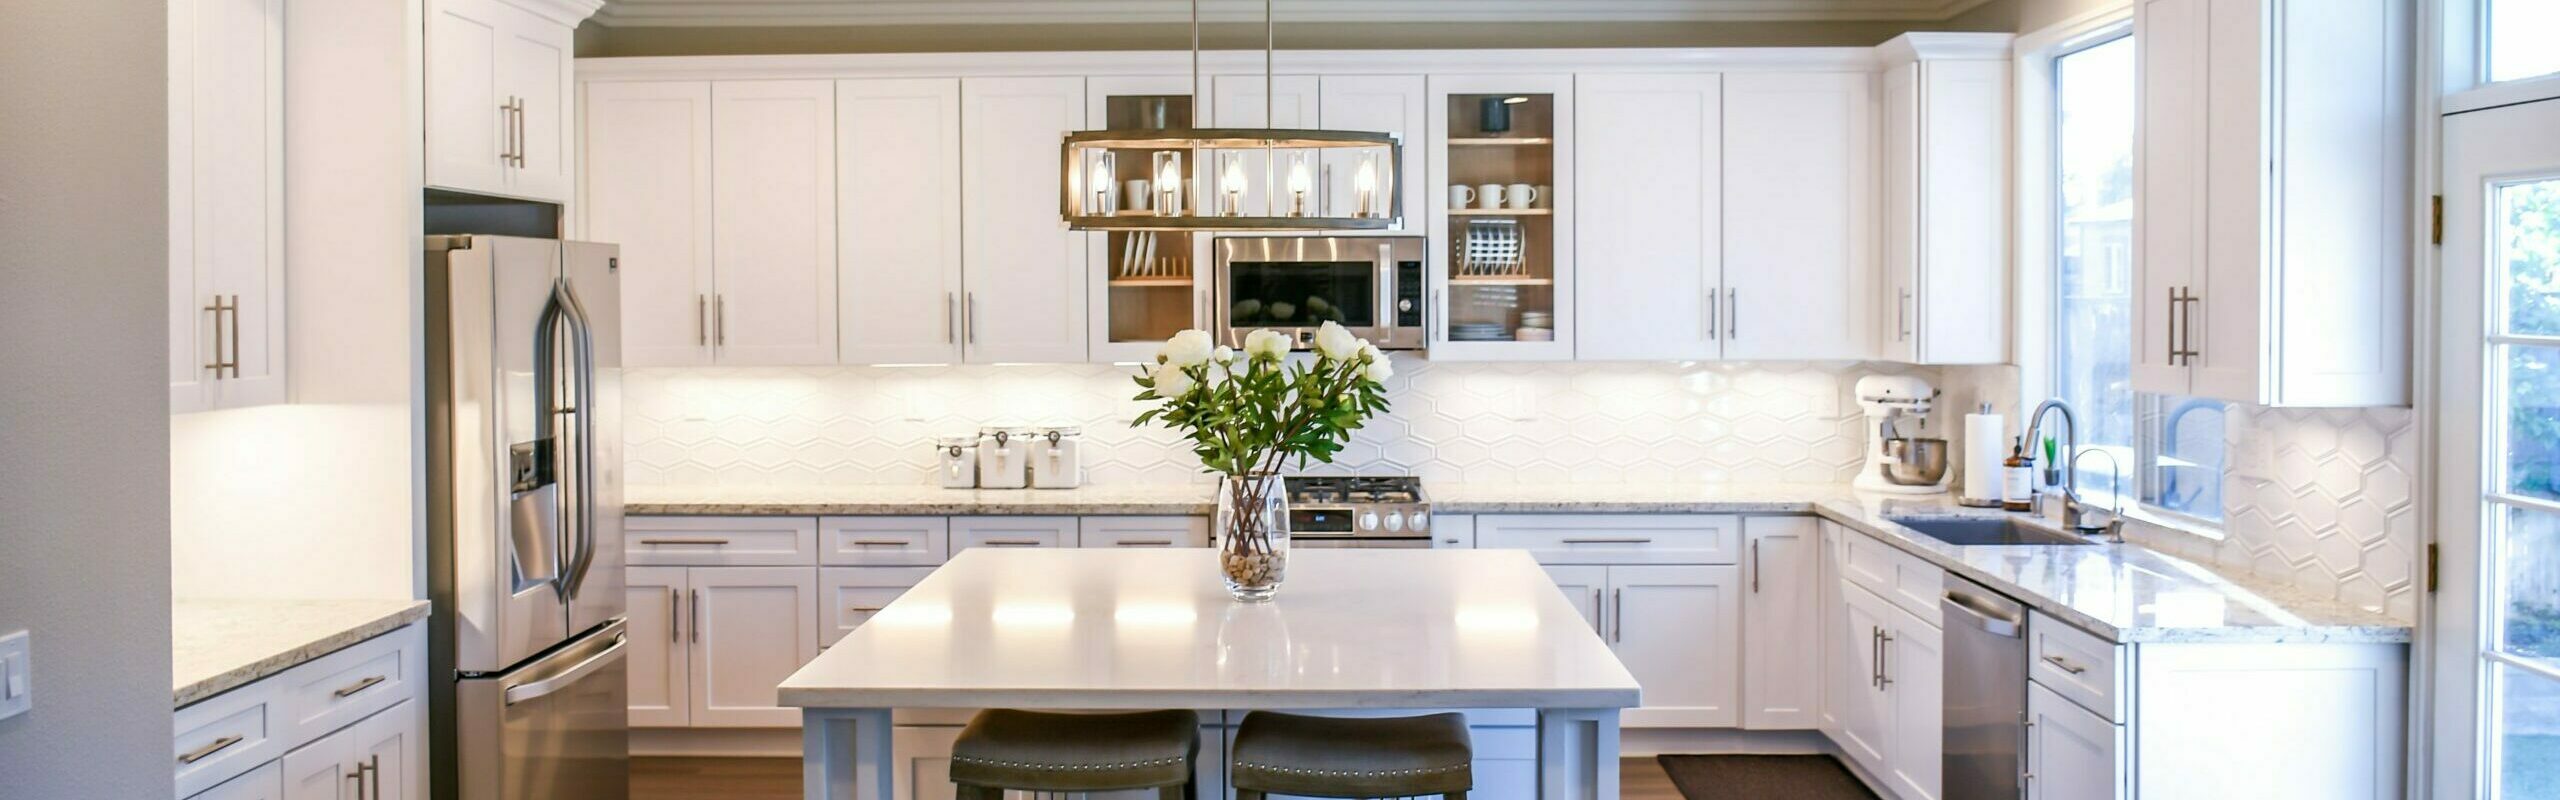 Kitchen White cabinets